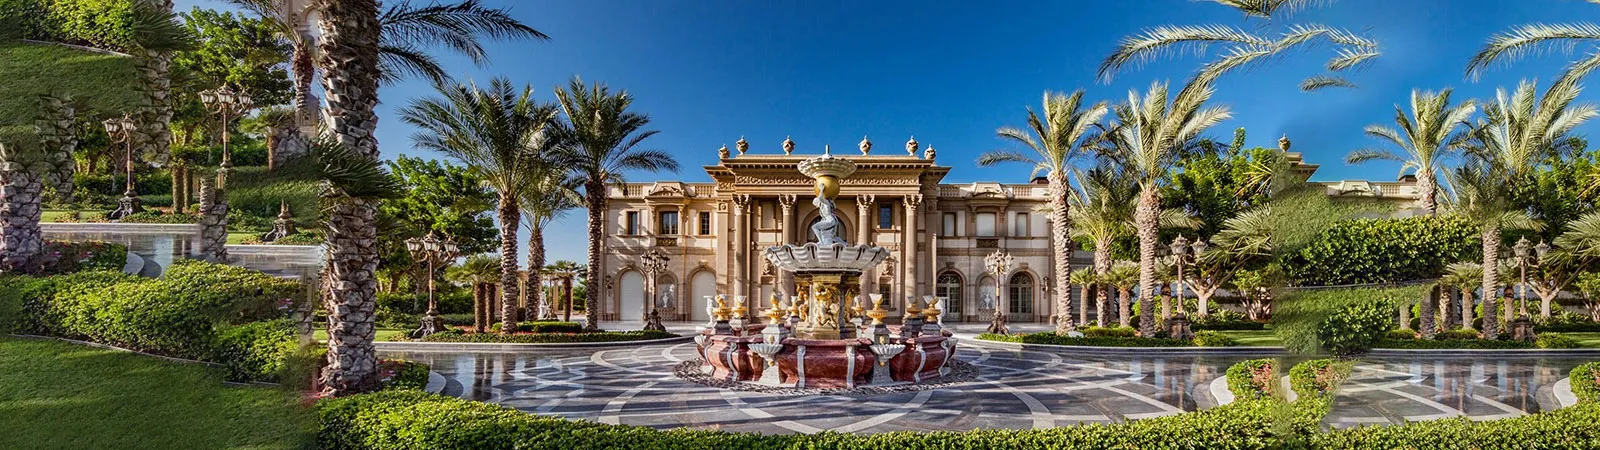 #9 Royal Style Mansion, Caesarea, (Israel) - $149 Million re sized image